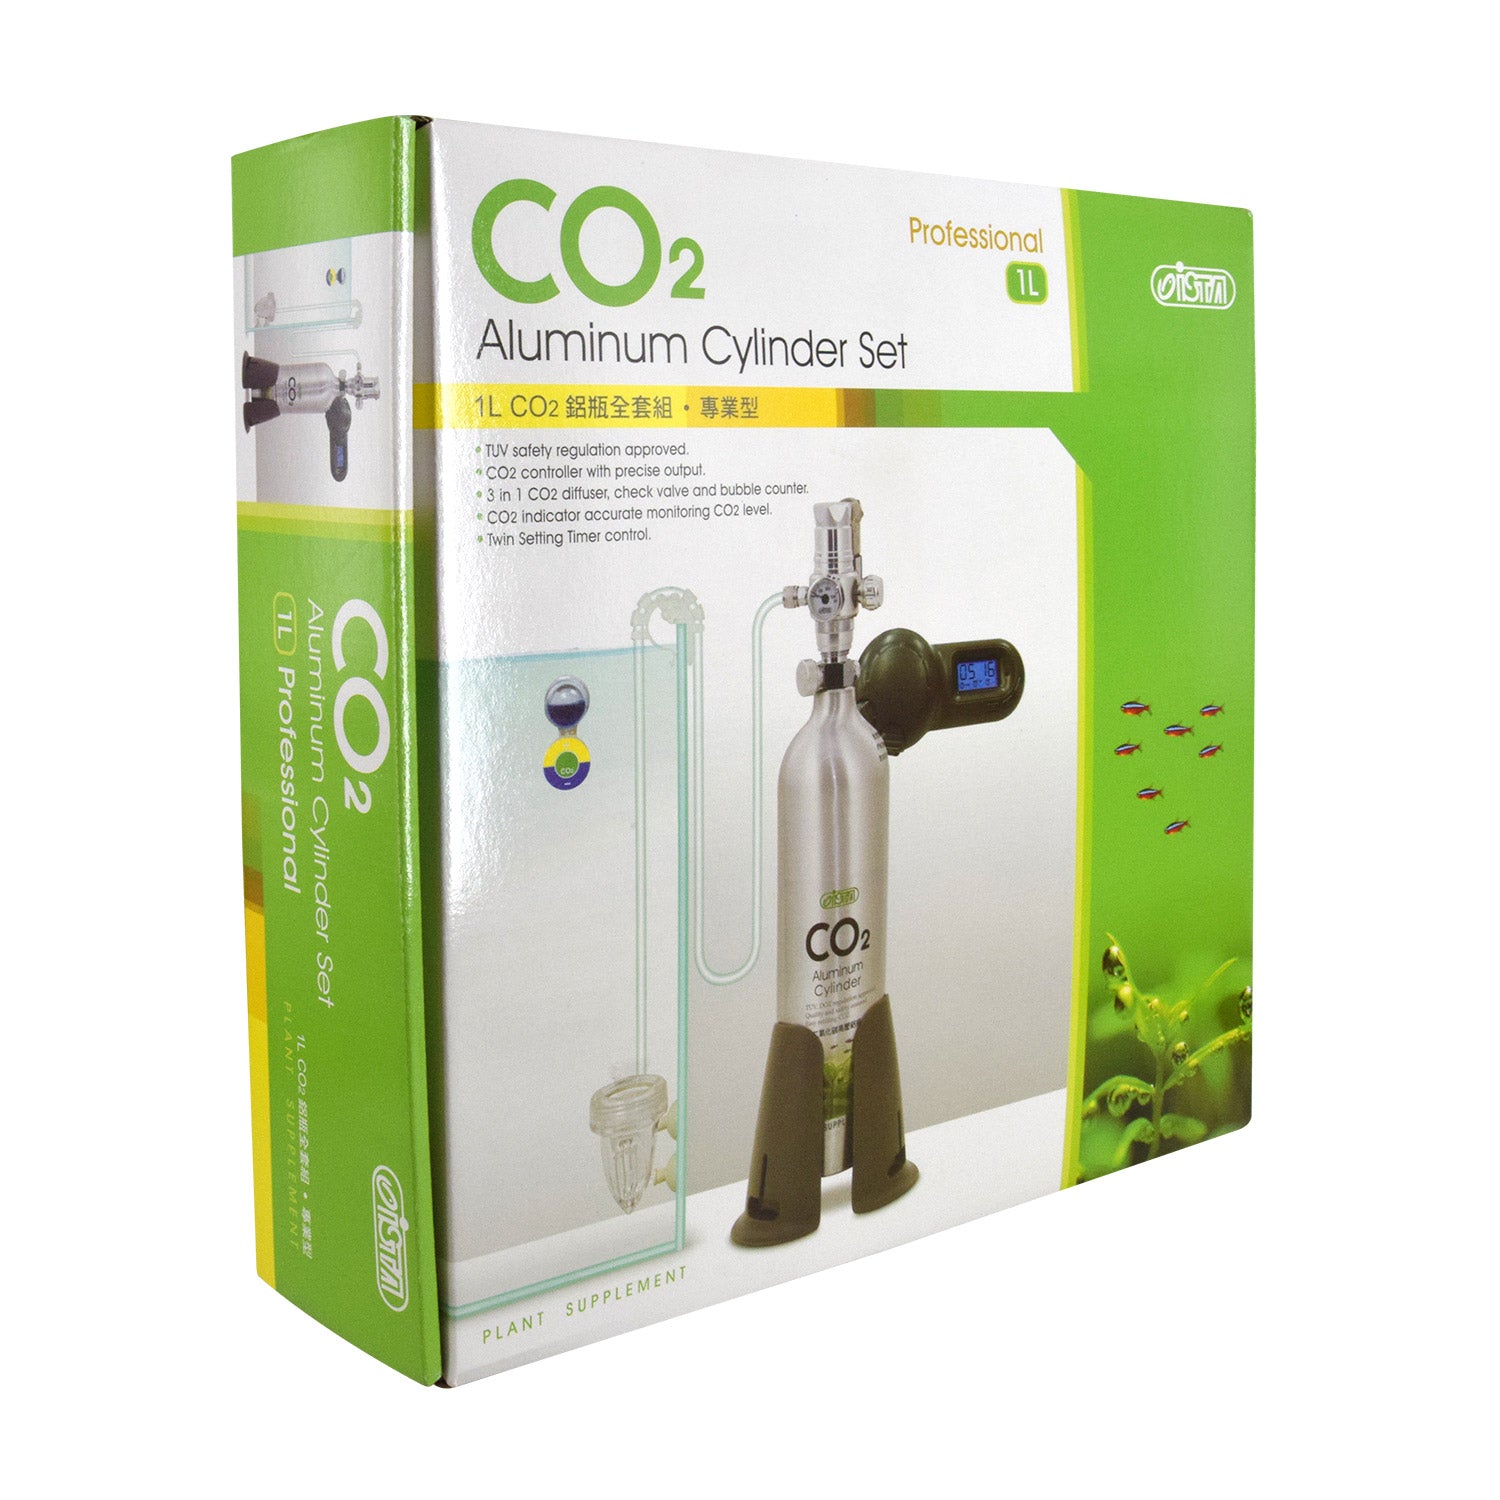 CO2 Aluminum Cylinder Set - 1L